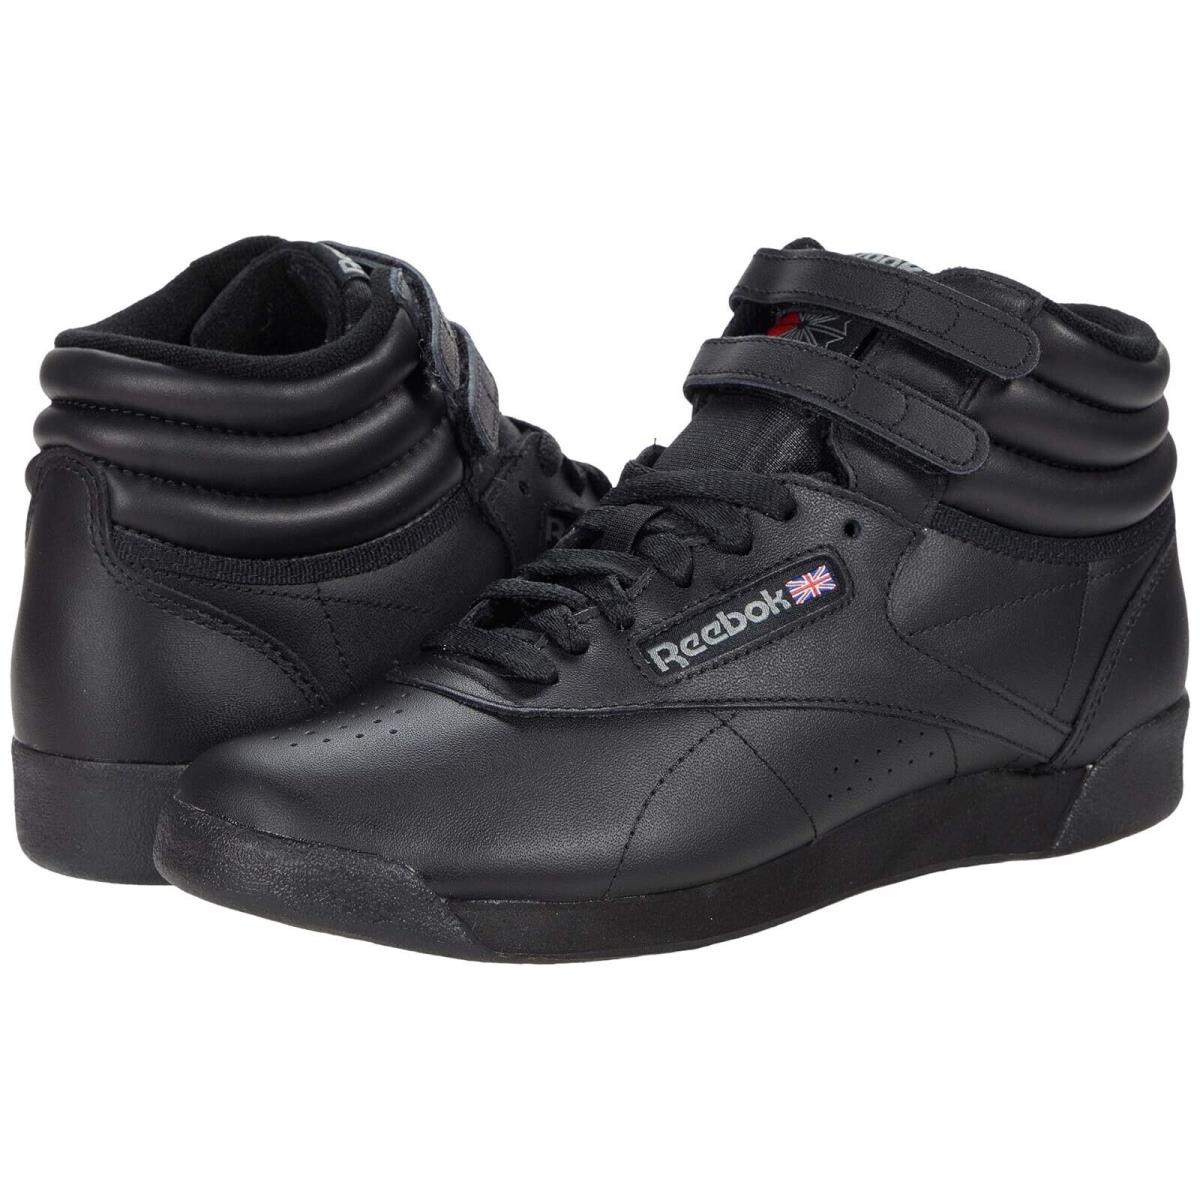 Reebok Freestyle Hi 5411 Ltd Women Casual Shoe Black